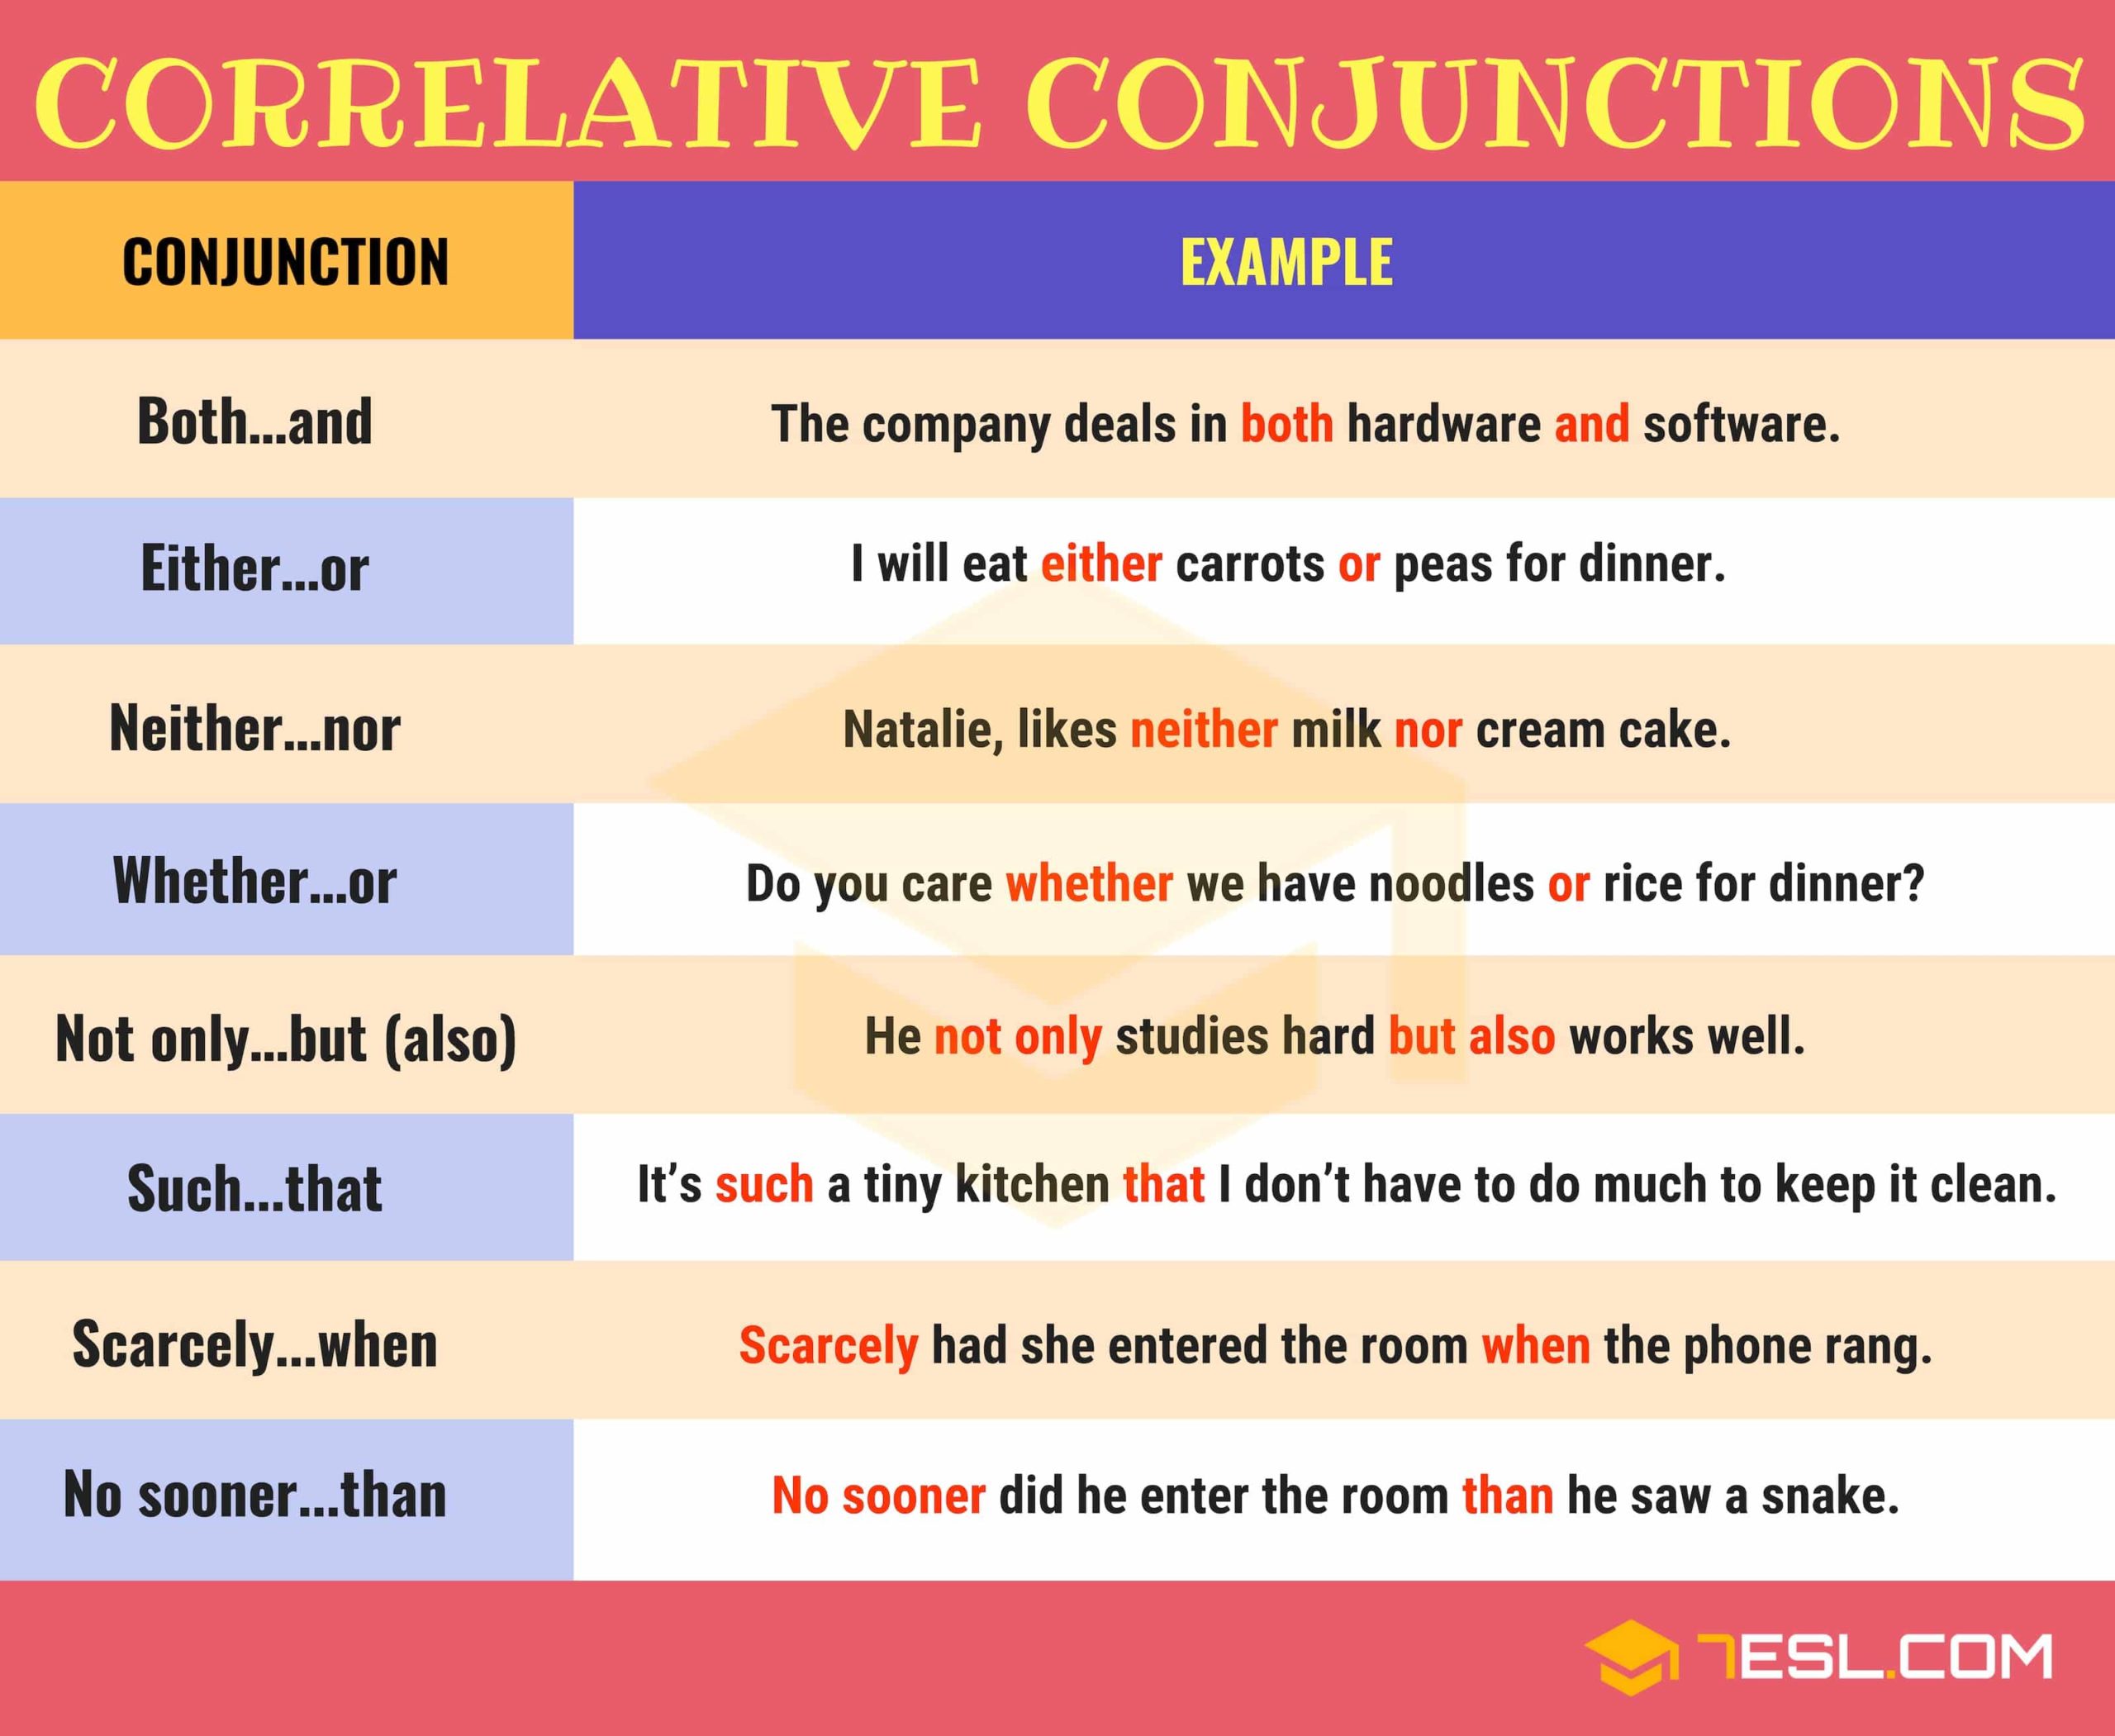 50 Examples Of Correlative Conjunctions